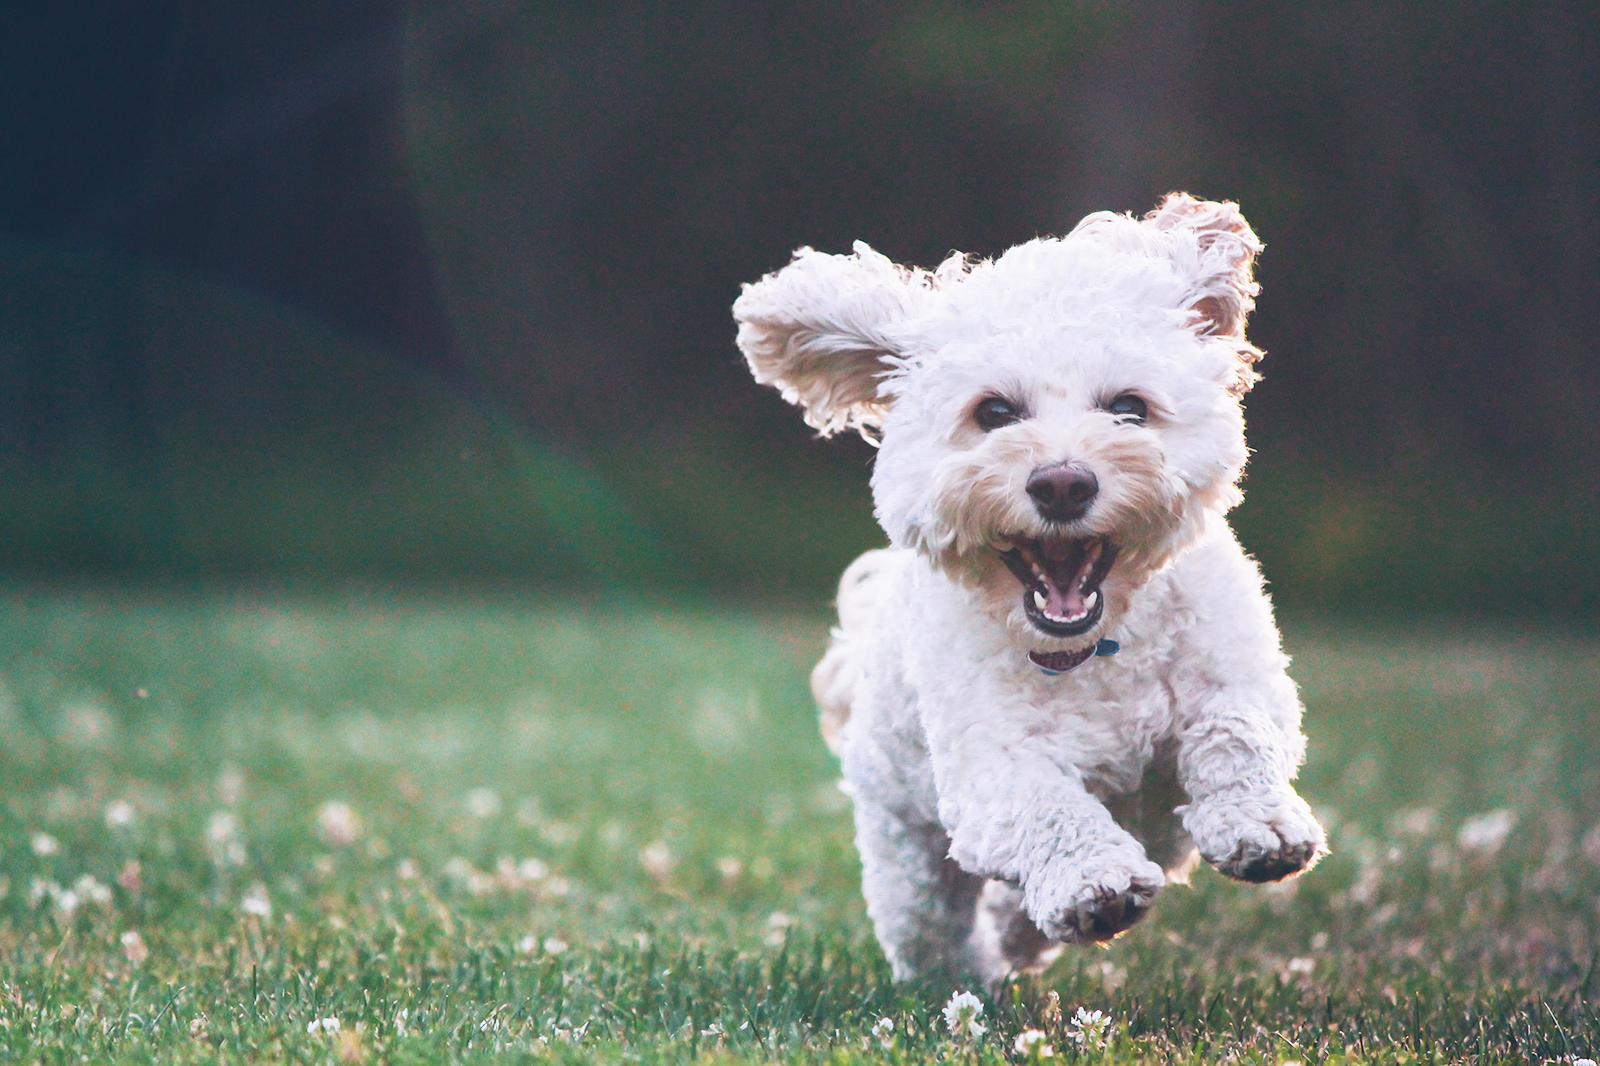 Small dog running happy through a grass field.